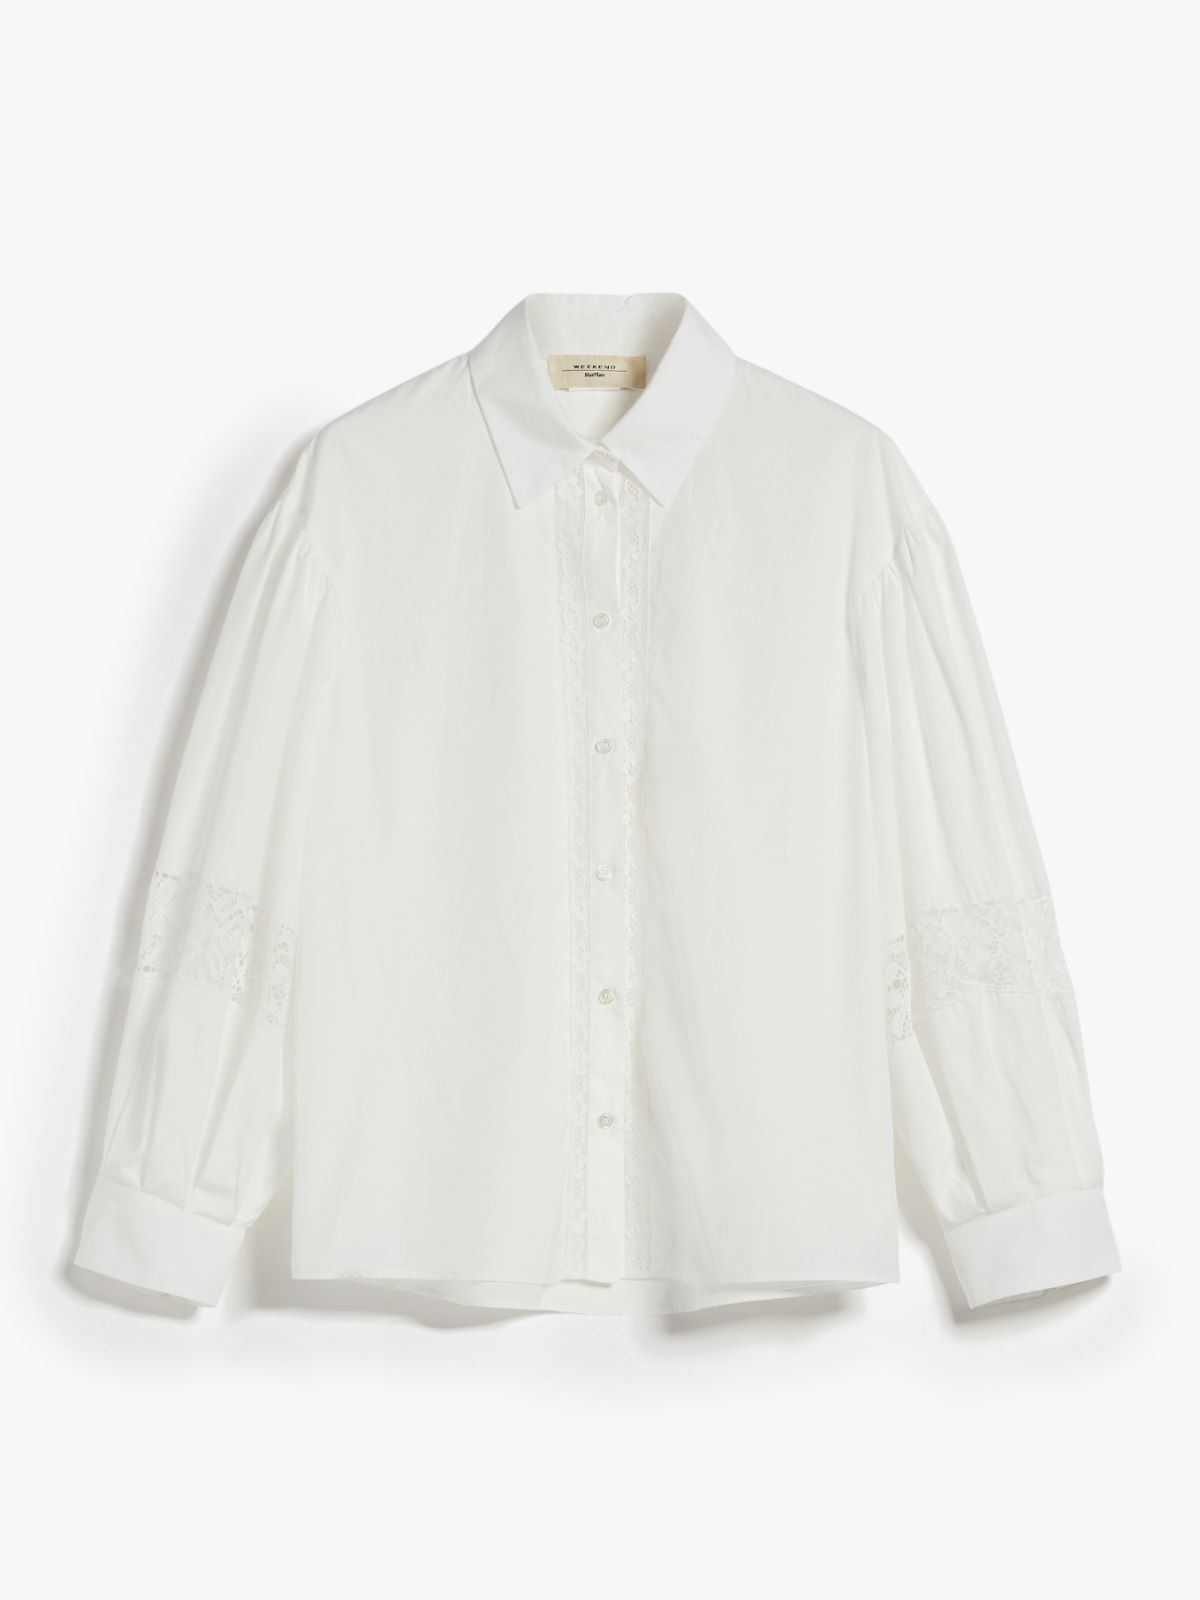 Poplin shirt with embroidery - OPTICAL WHITE - Weekend Max Mara - 8